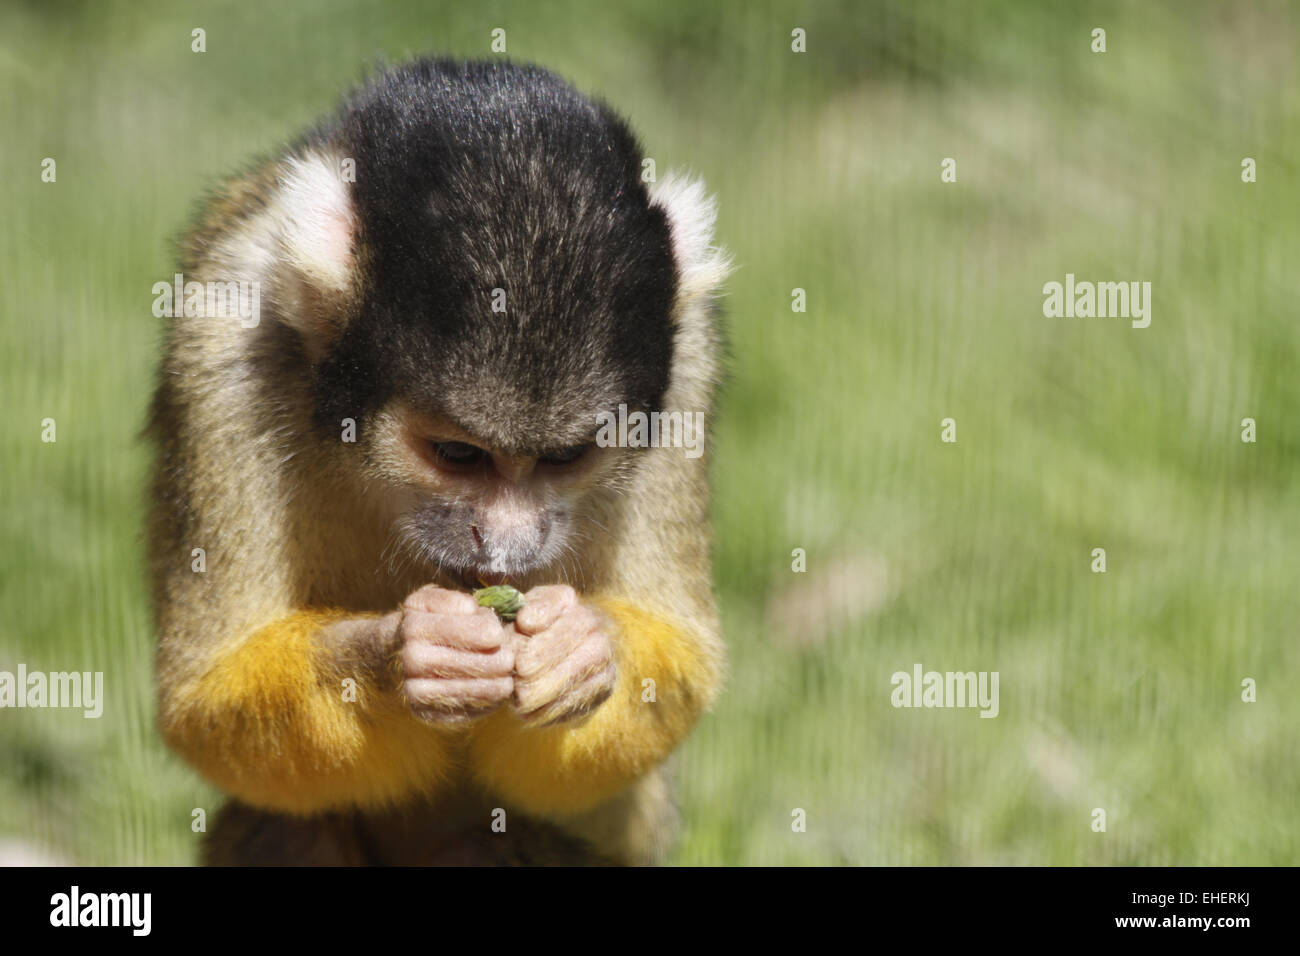 squirrel monkey Stock Photo